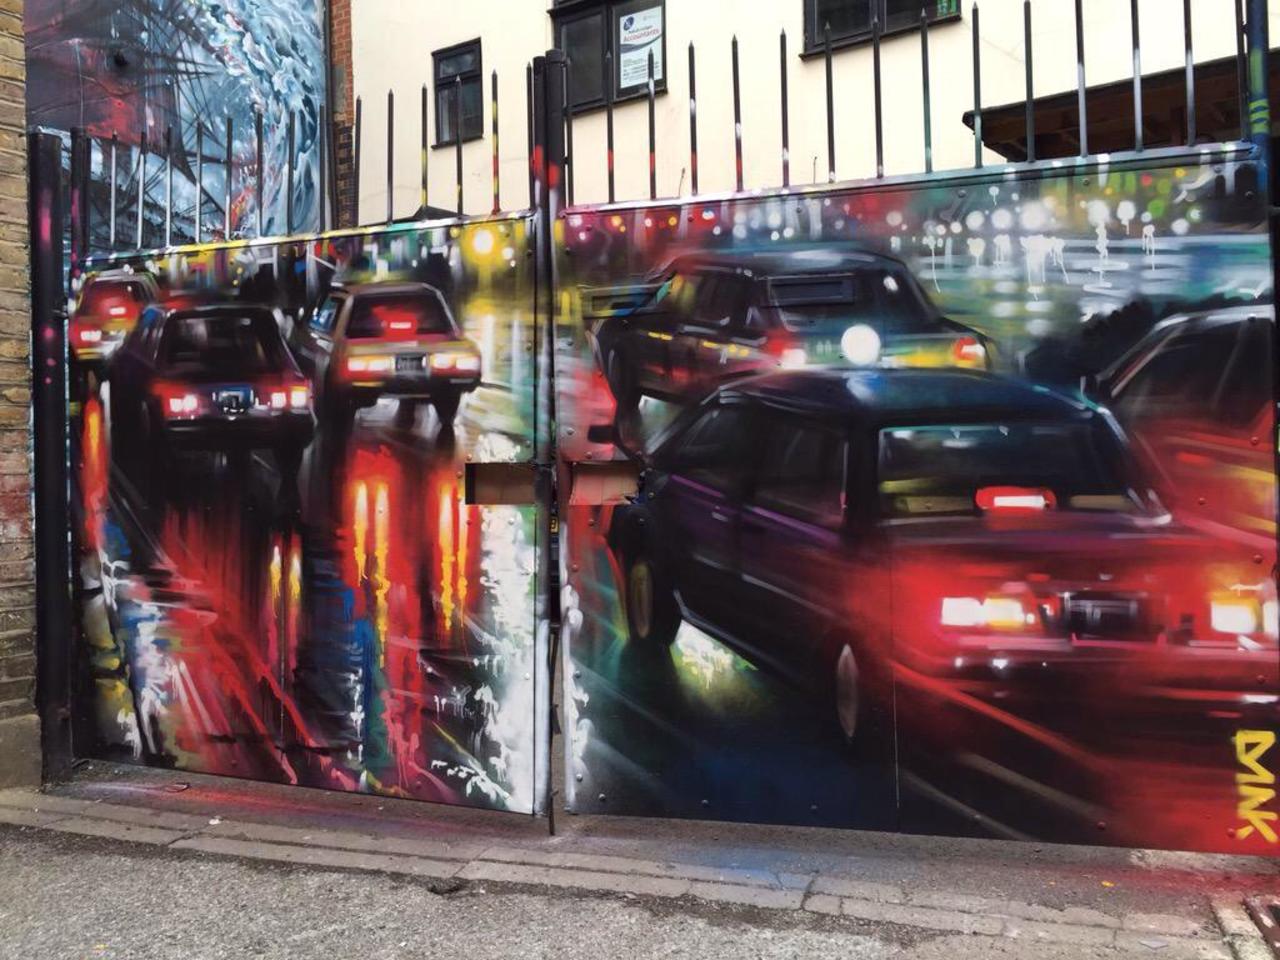 New Street Art by DanKitchener in Brick Lane London 

#art #graffiti #mural #streetart http://t.co/wPcR1yHZGJ googlestreetart chinatoniq